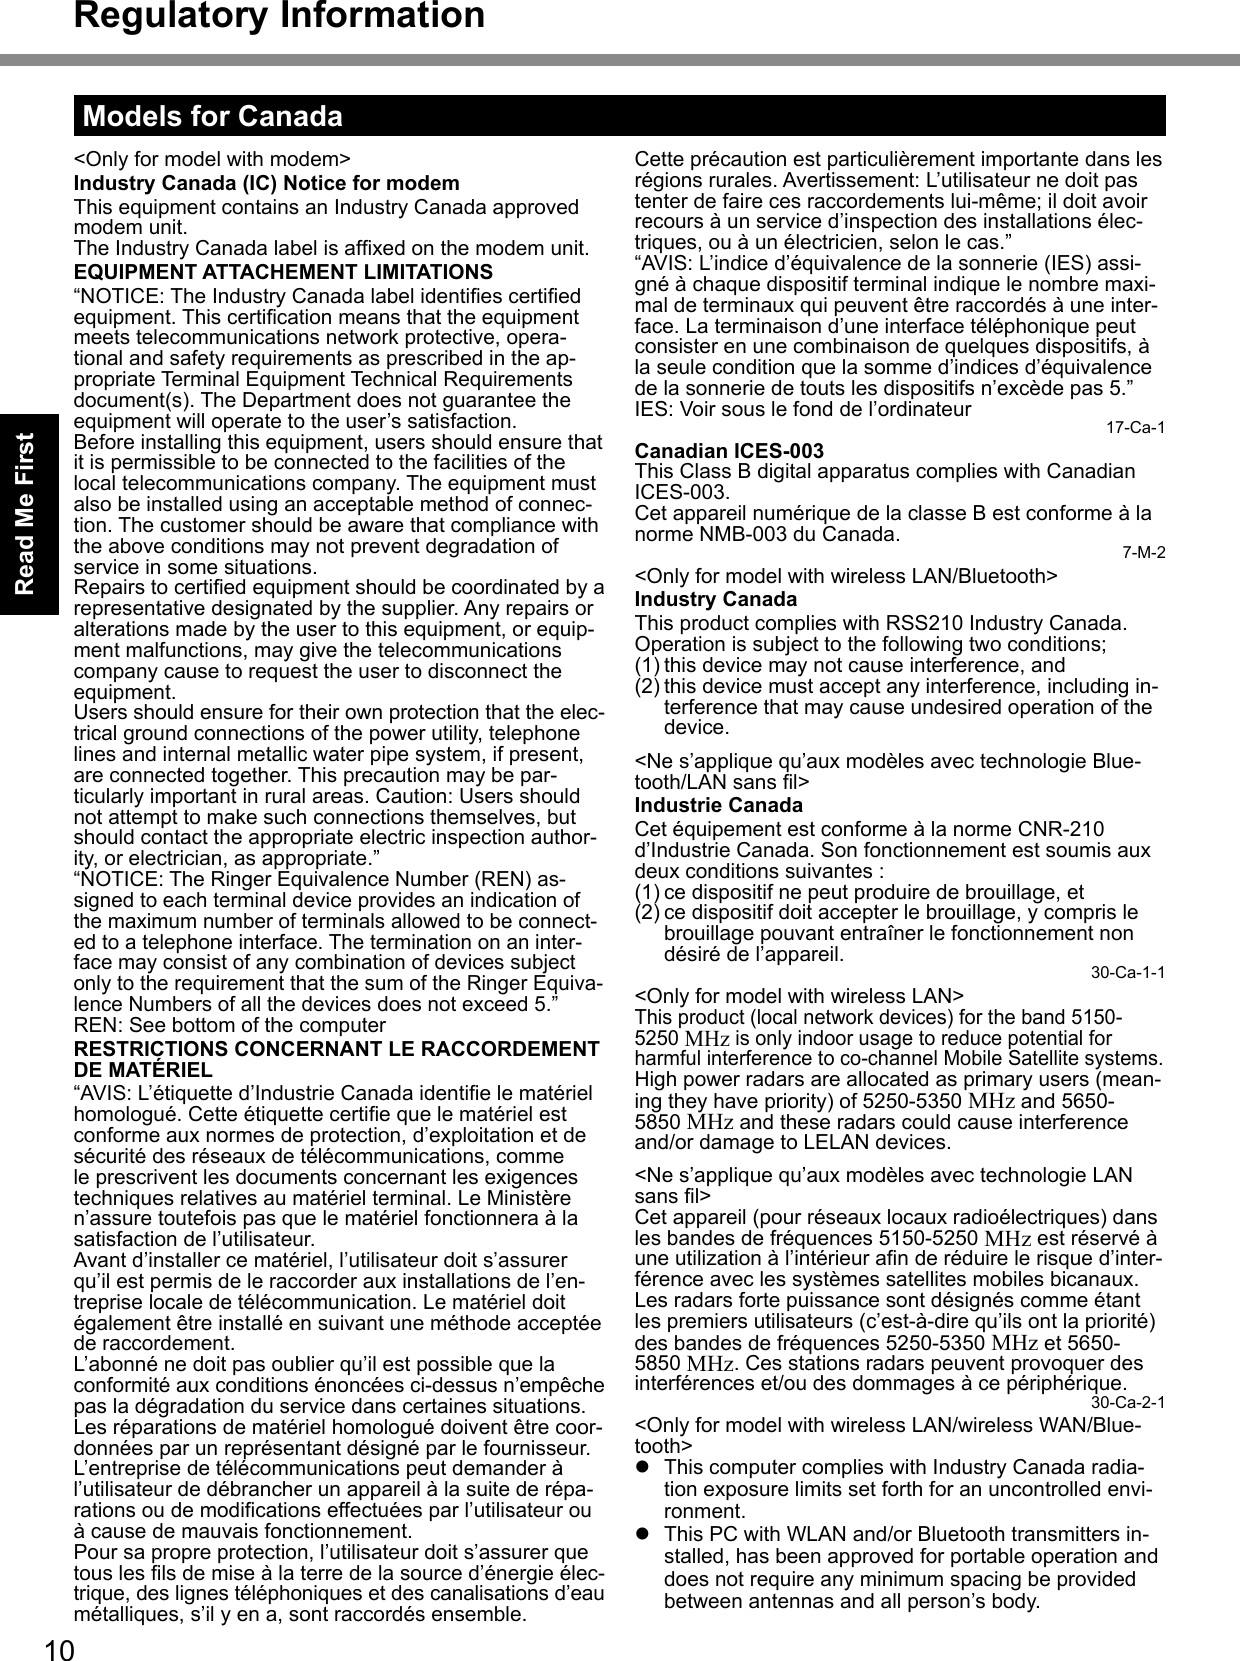 Read Me FirstRegulatory InformationModels for CanadaIndustry Canada (IC) Notice for modemEQUIPMENT ATTACHEMENT LIMITATIONSRESTRICTIONS CONCERNANT LE RACCORDEMENT DE MATÉRIEL Canadian ICES-003 Industry CanadaIndustrie Canada MHzMHzMHzMHzMHzMHzl l 